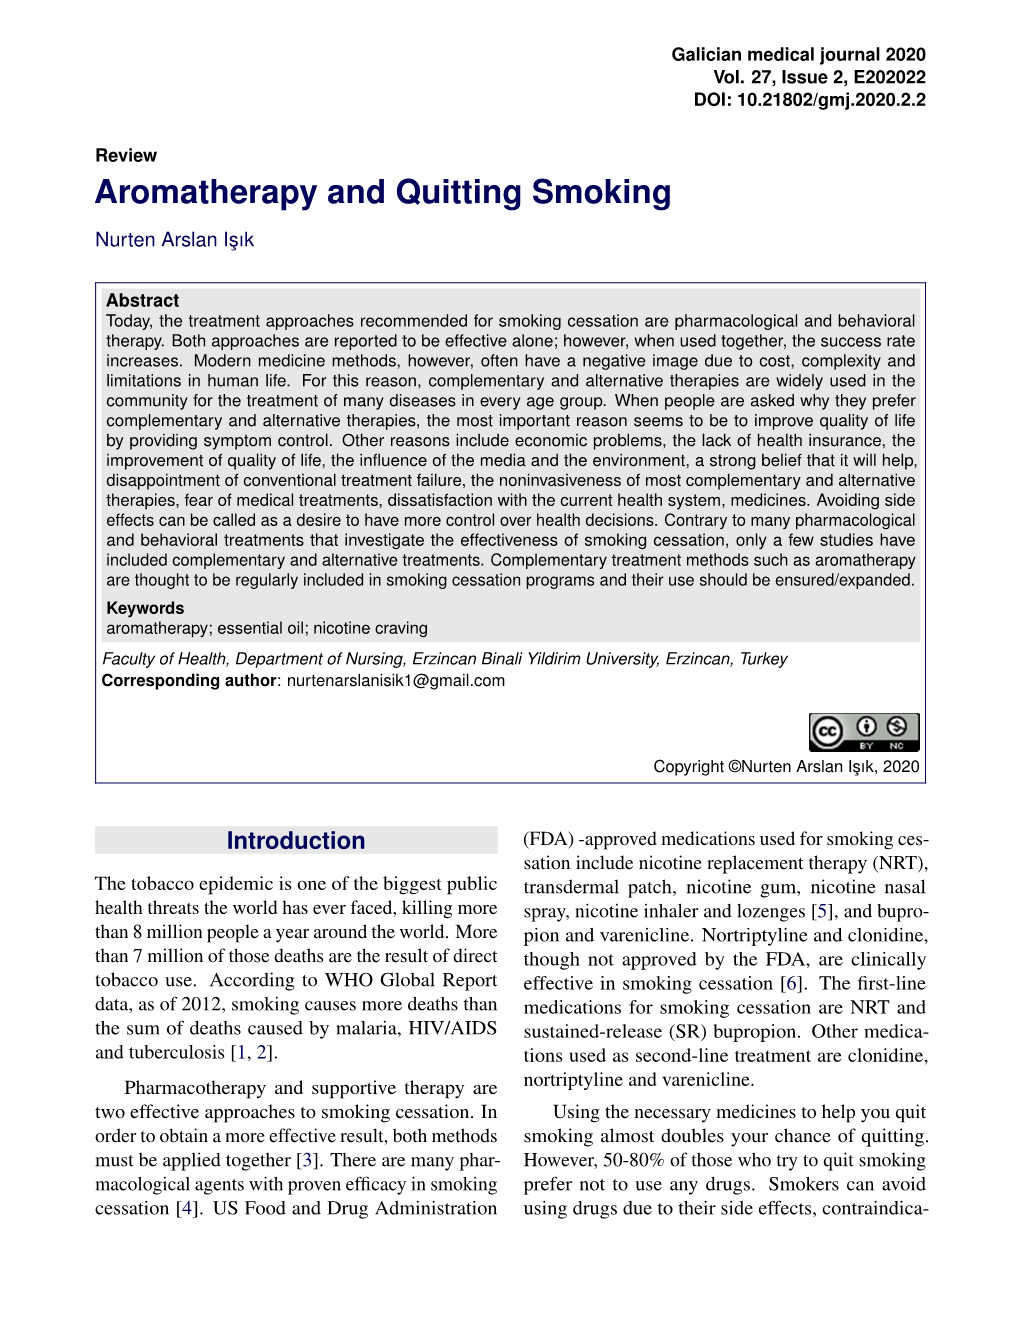 Aromatherapy and Quitting Smoking